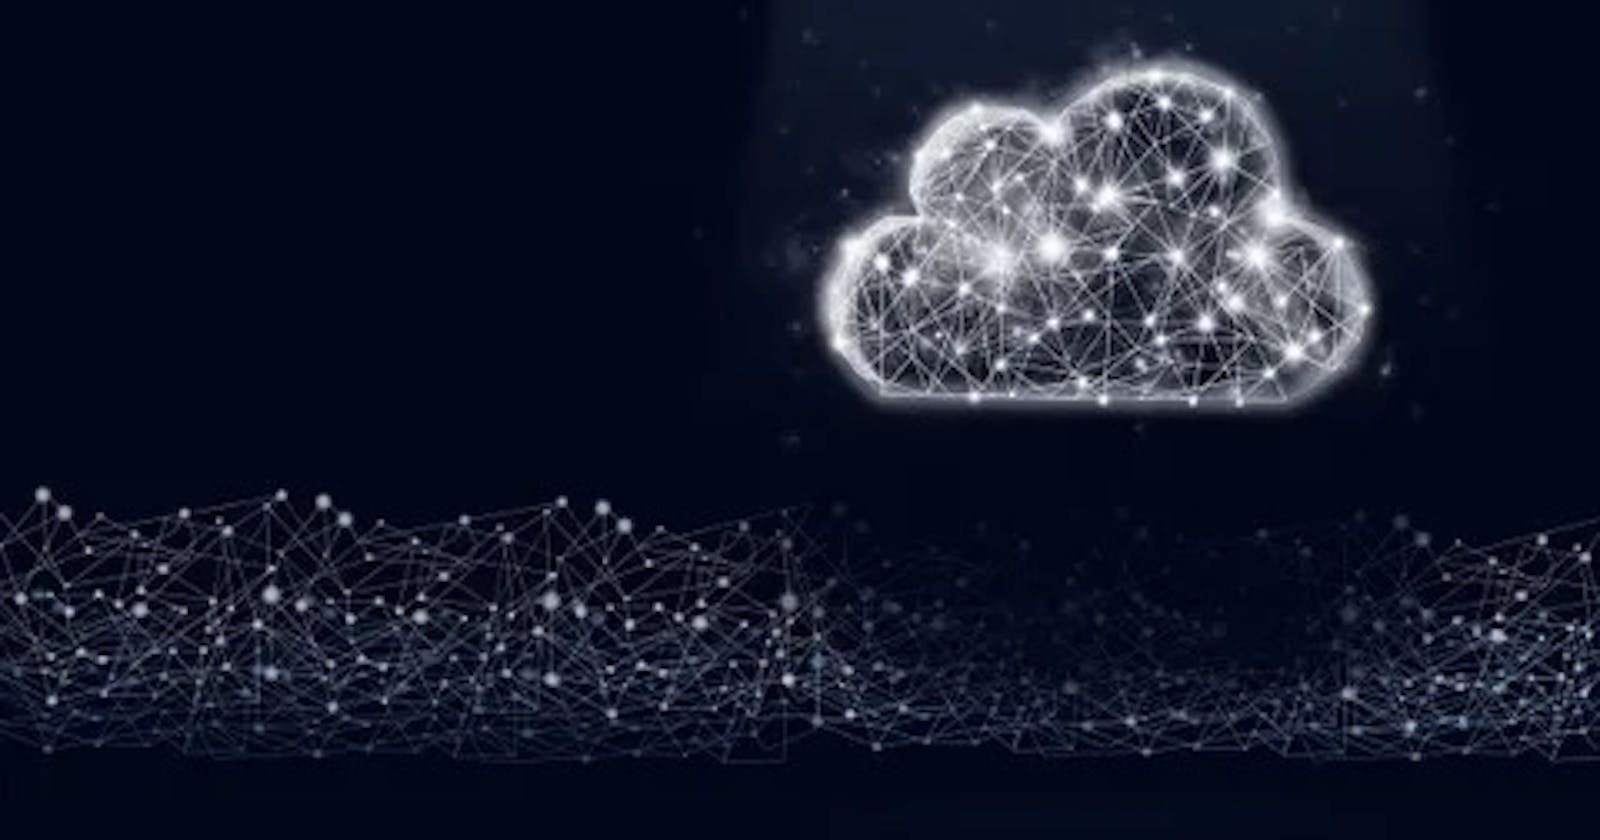 Migration to Cloud